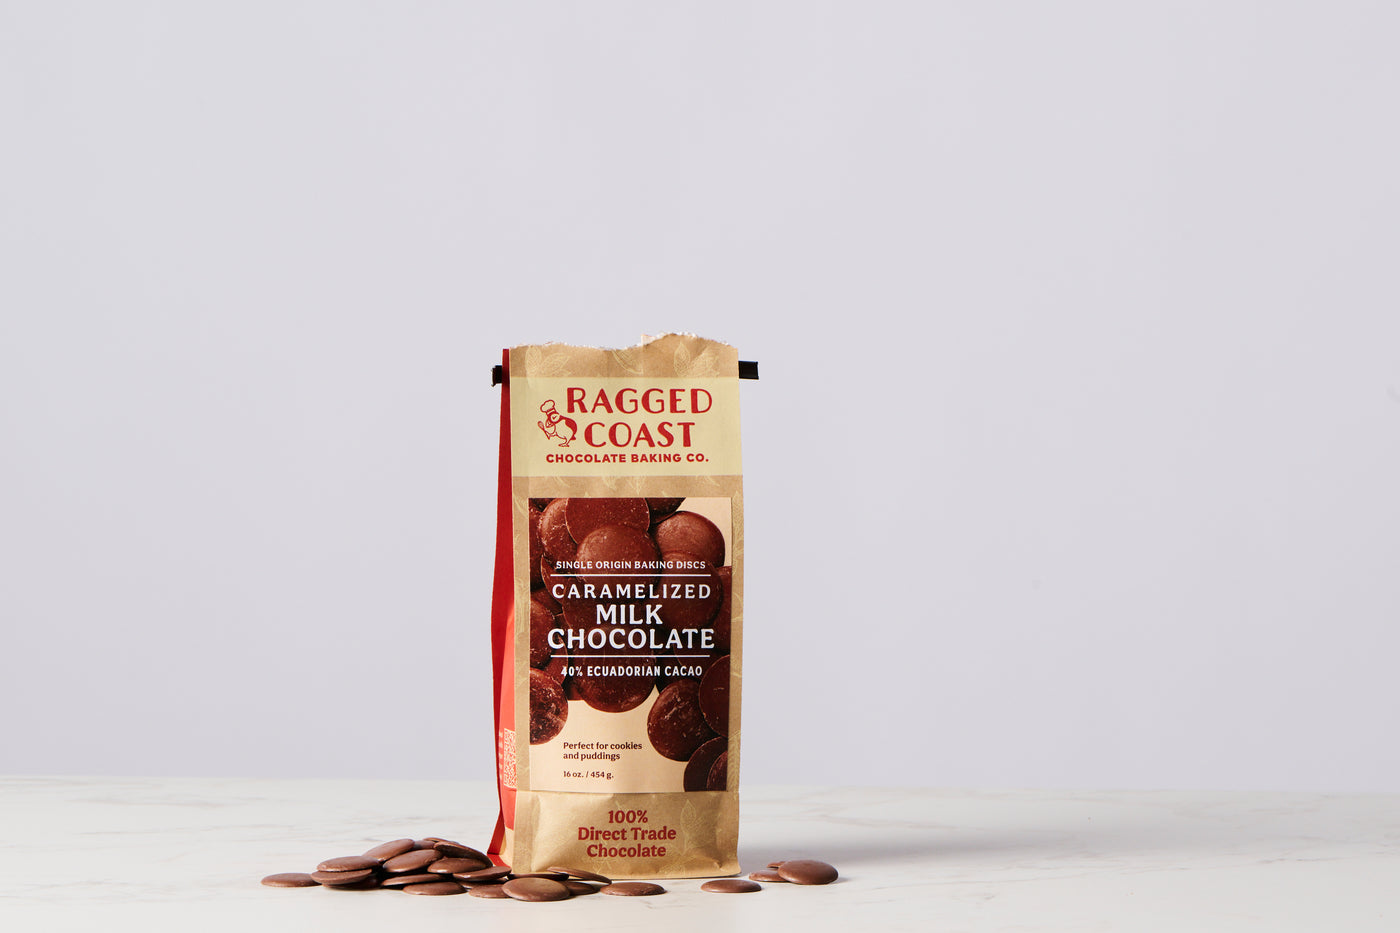 Direct Trade Ecuadorian 40% Caramelized Milk Chocolate - 16 ounces